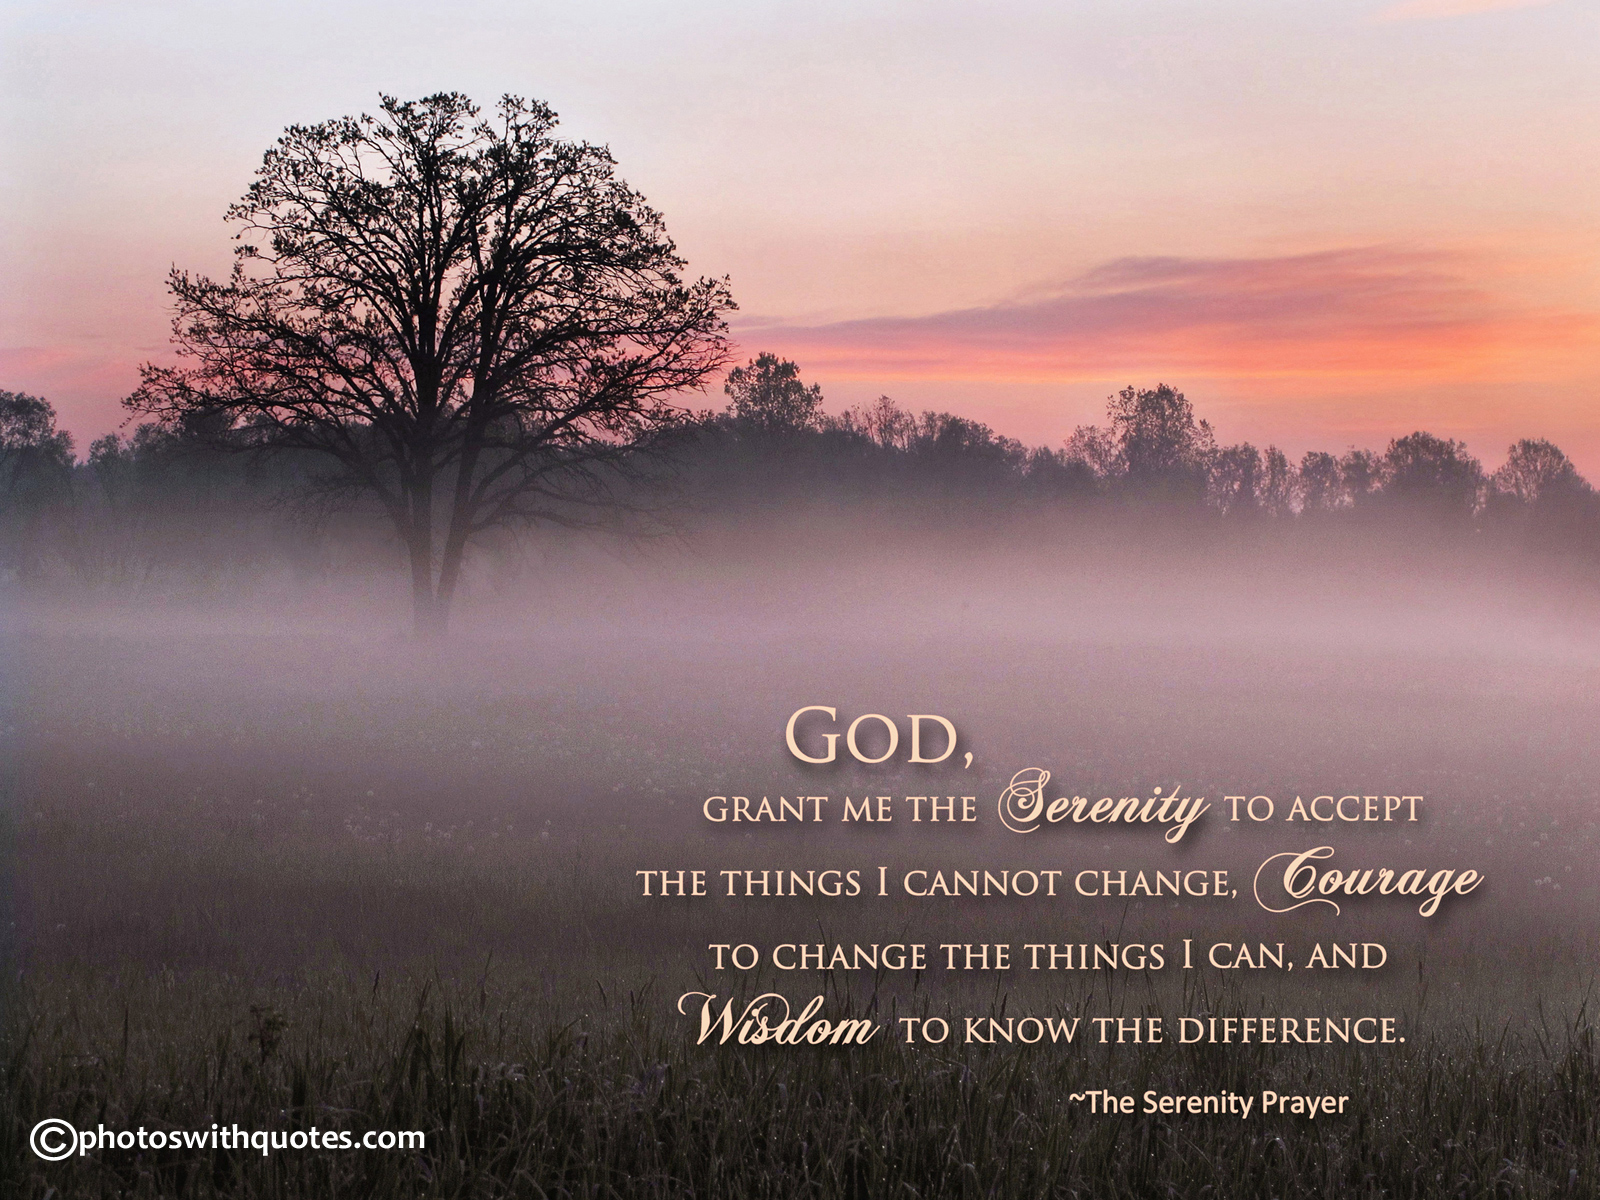 Serenity Prayer Image